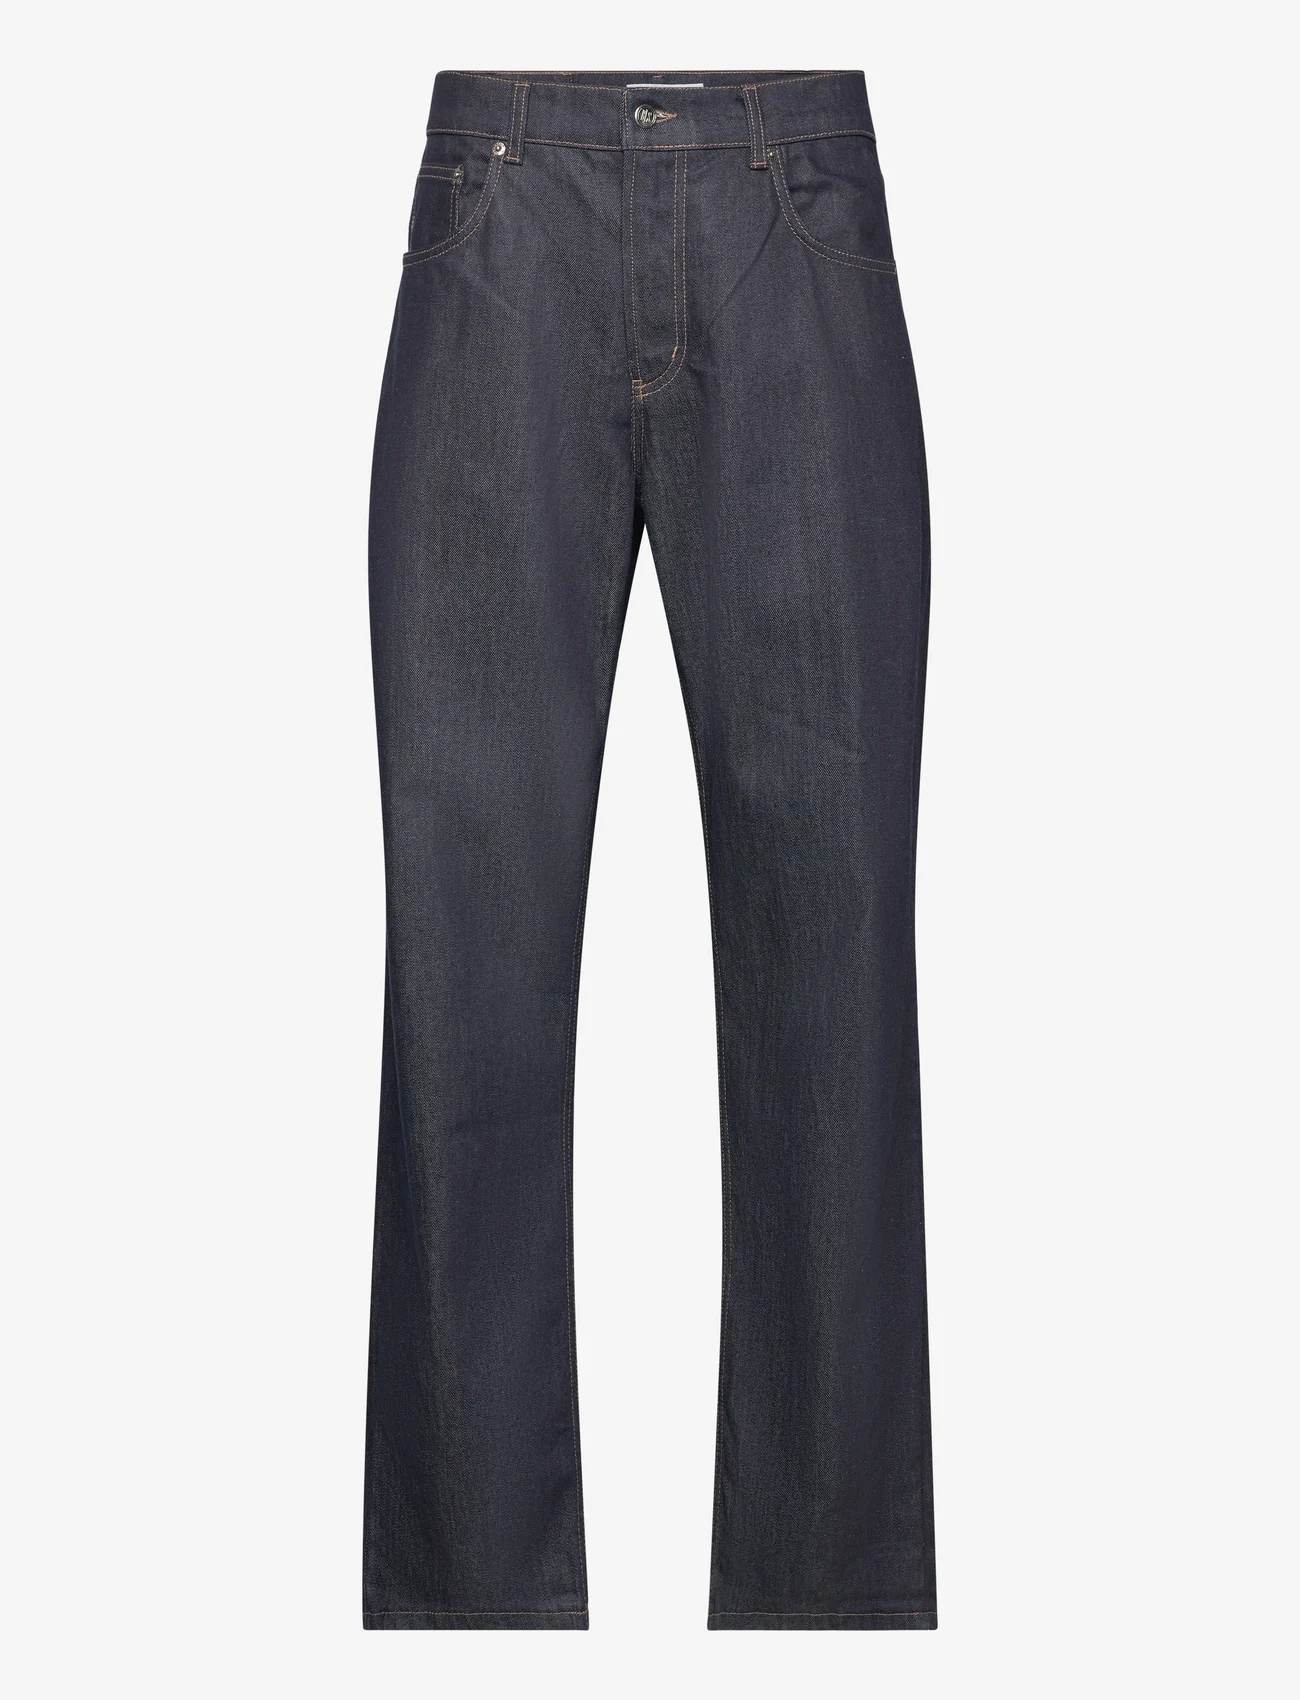 BLS Hafnia - Cursive Jeans - regular jeans - navy - 0